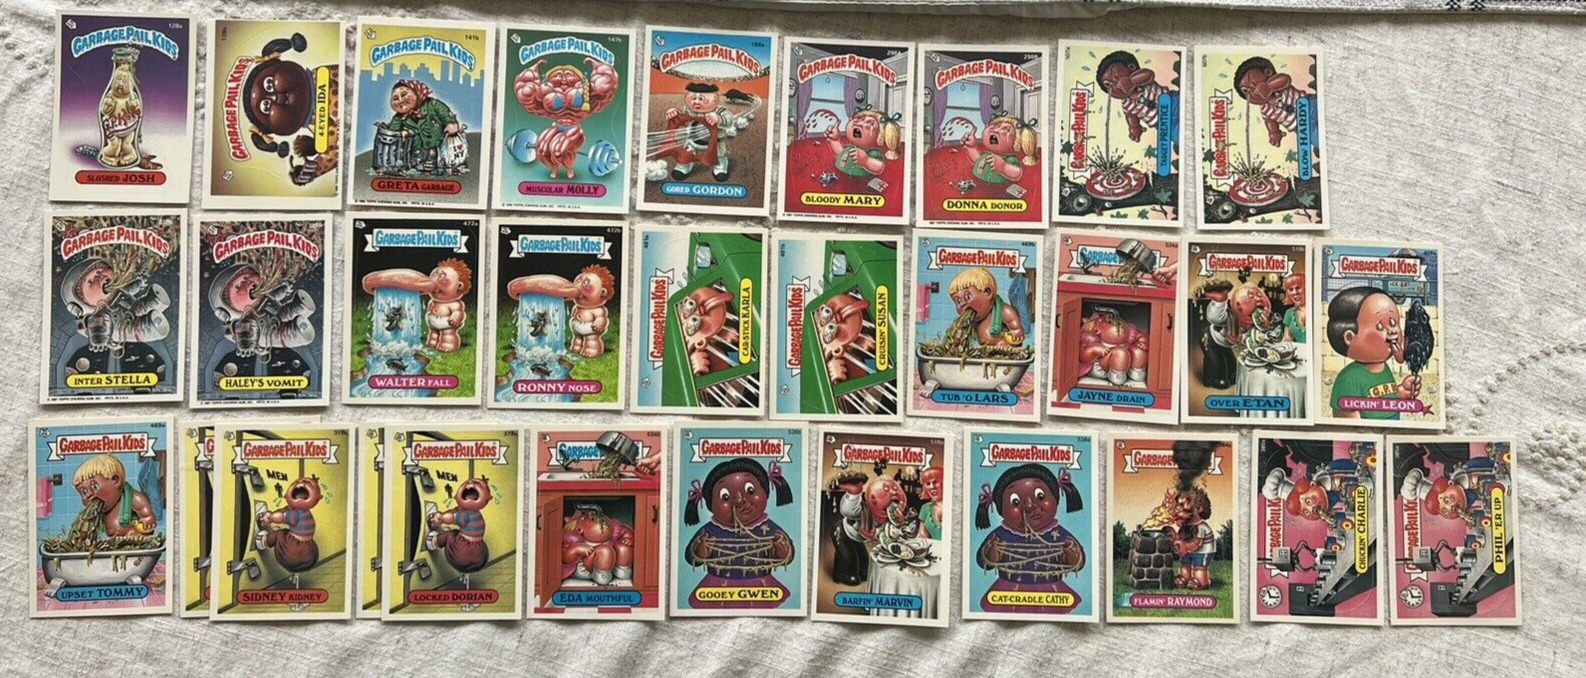 Lot of 31 : 1986-88 Topps Garbage Pail Kids Sticker Cards NEAR MINT